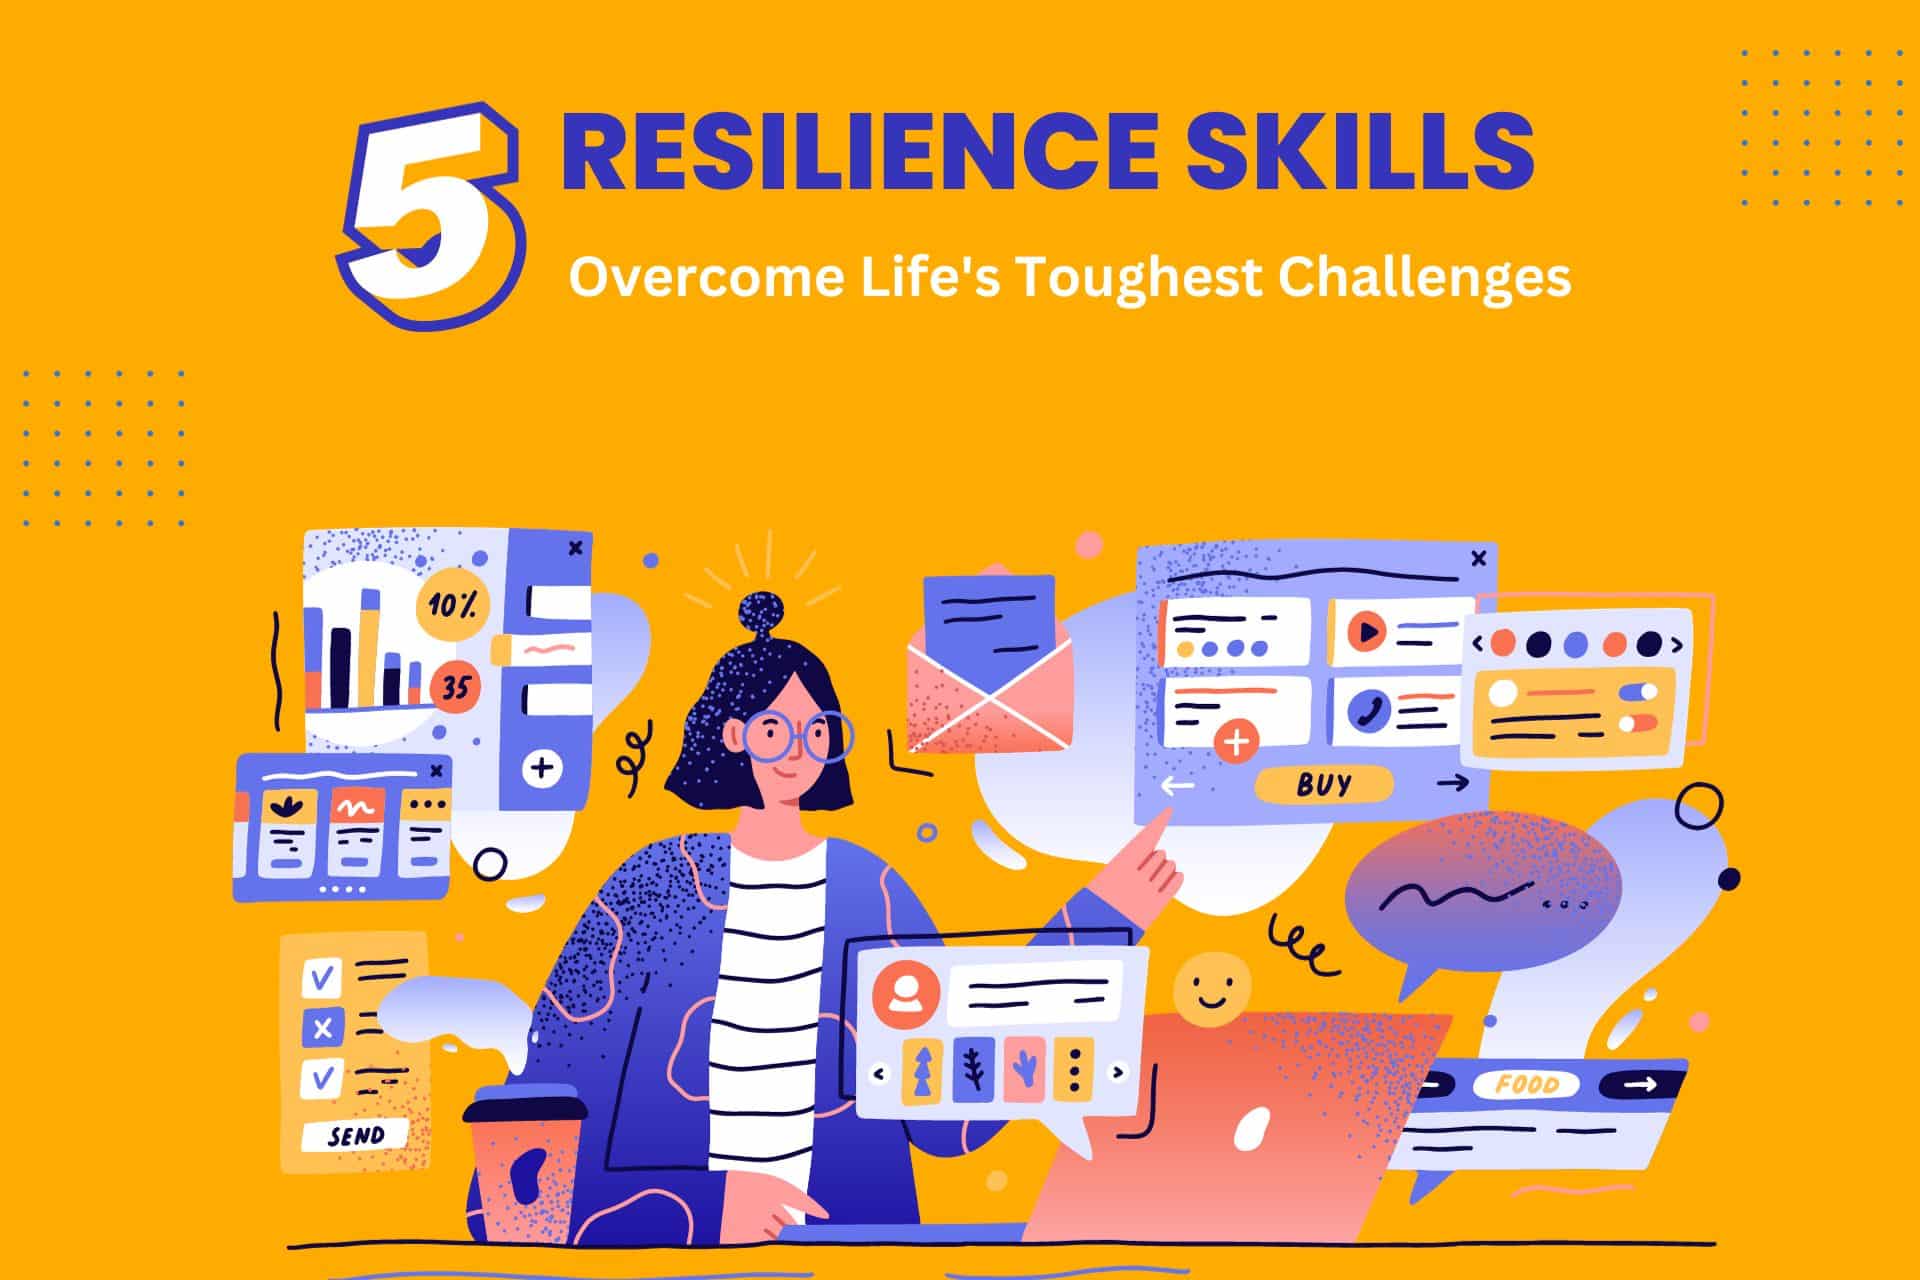 resilience skills